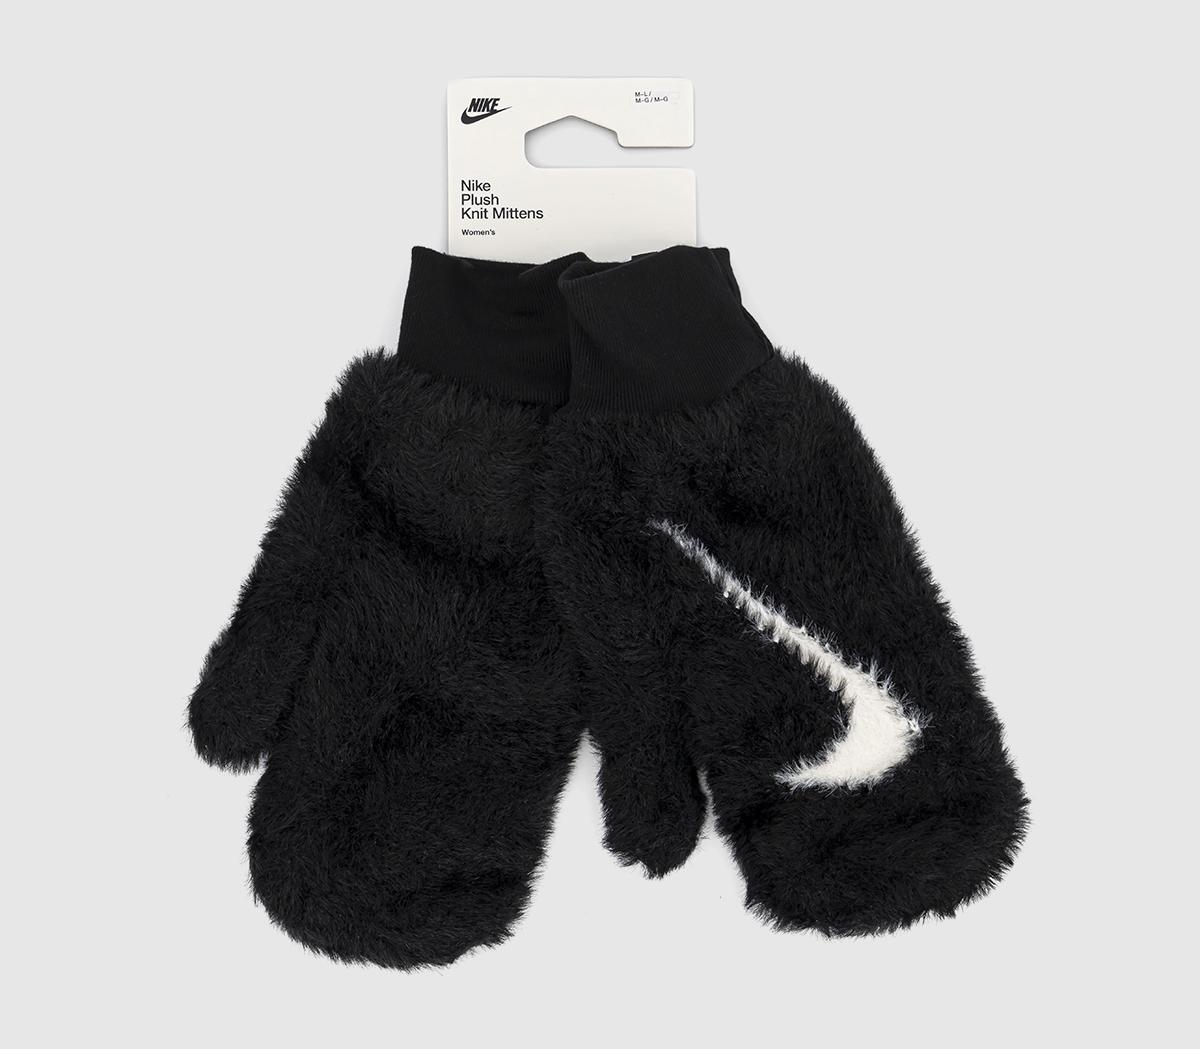 Nike Accessories Plush Knit Mittens Black White, M/l